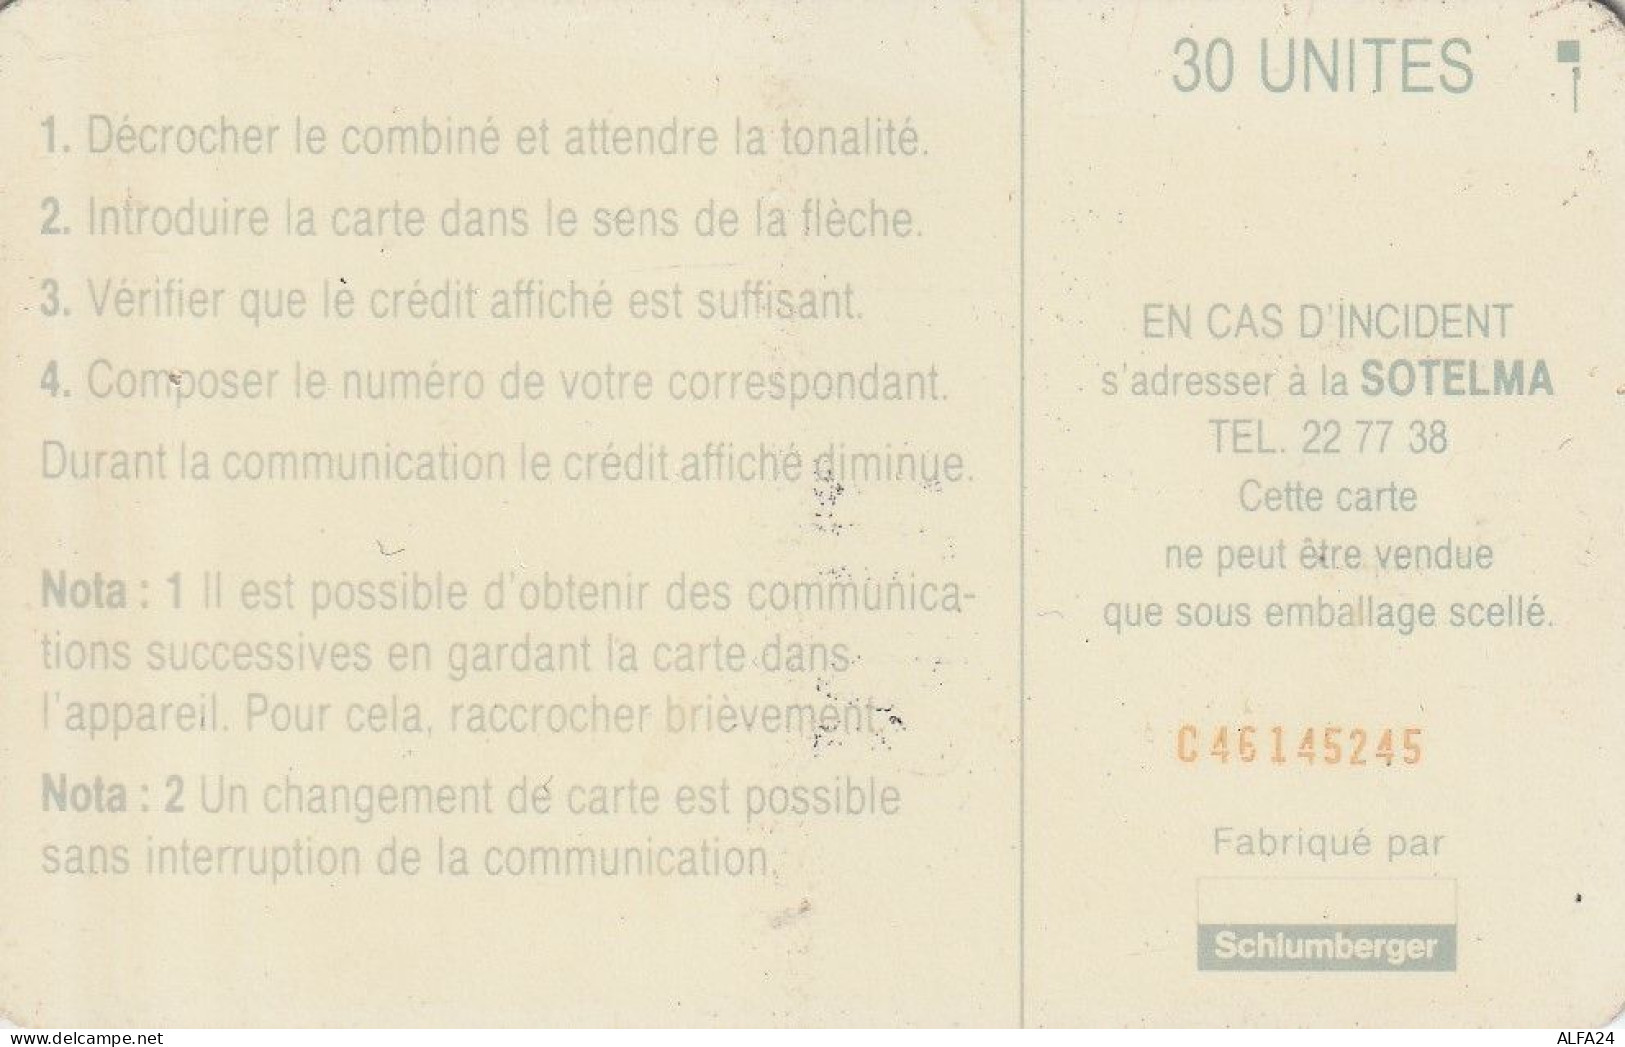 PHONE CARD MALI  (E30.11.6 - Mali